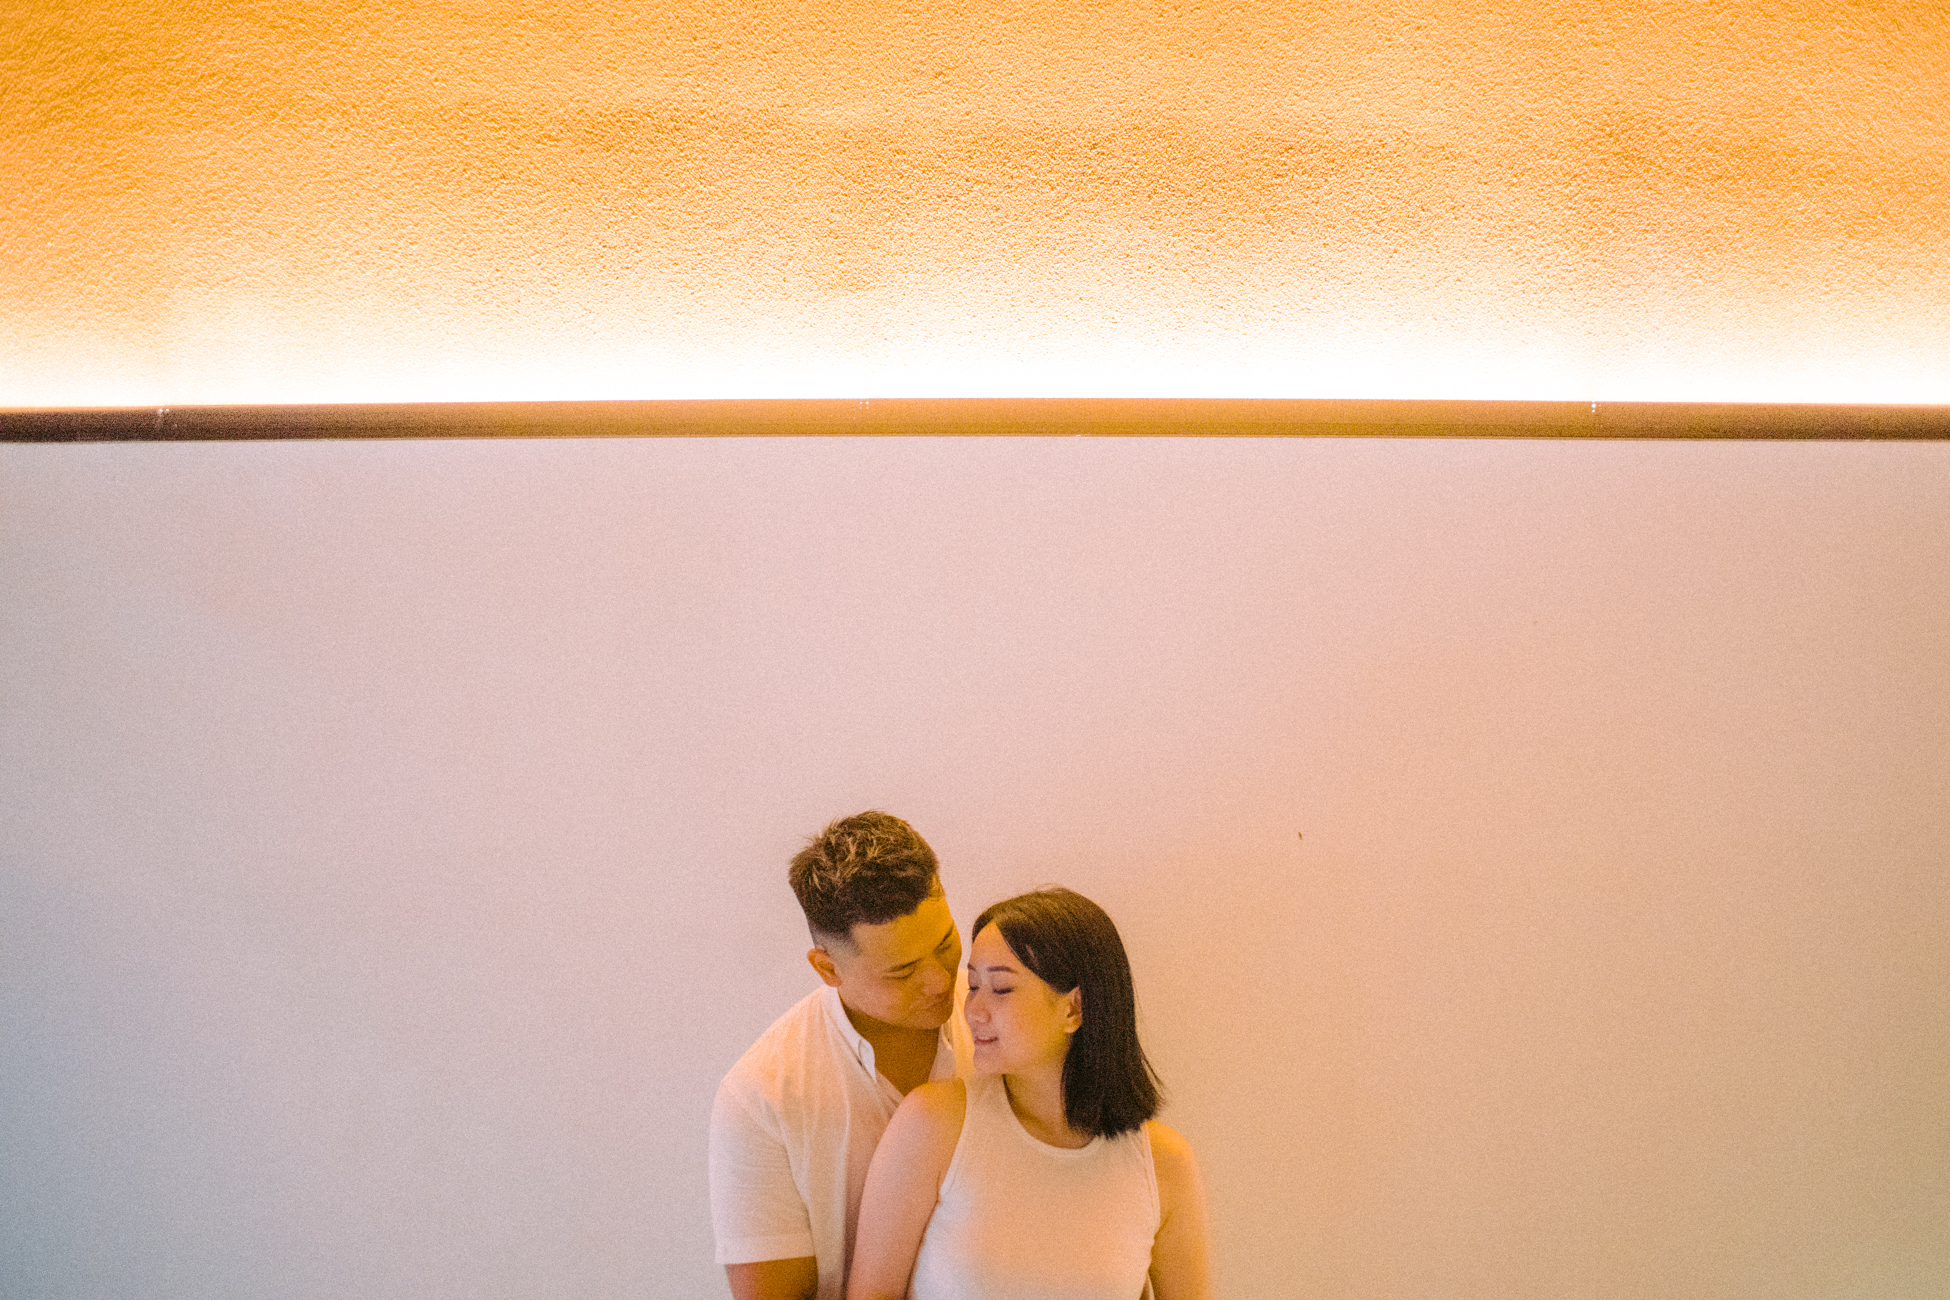 Lovely couple photo session with warm orange light